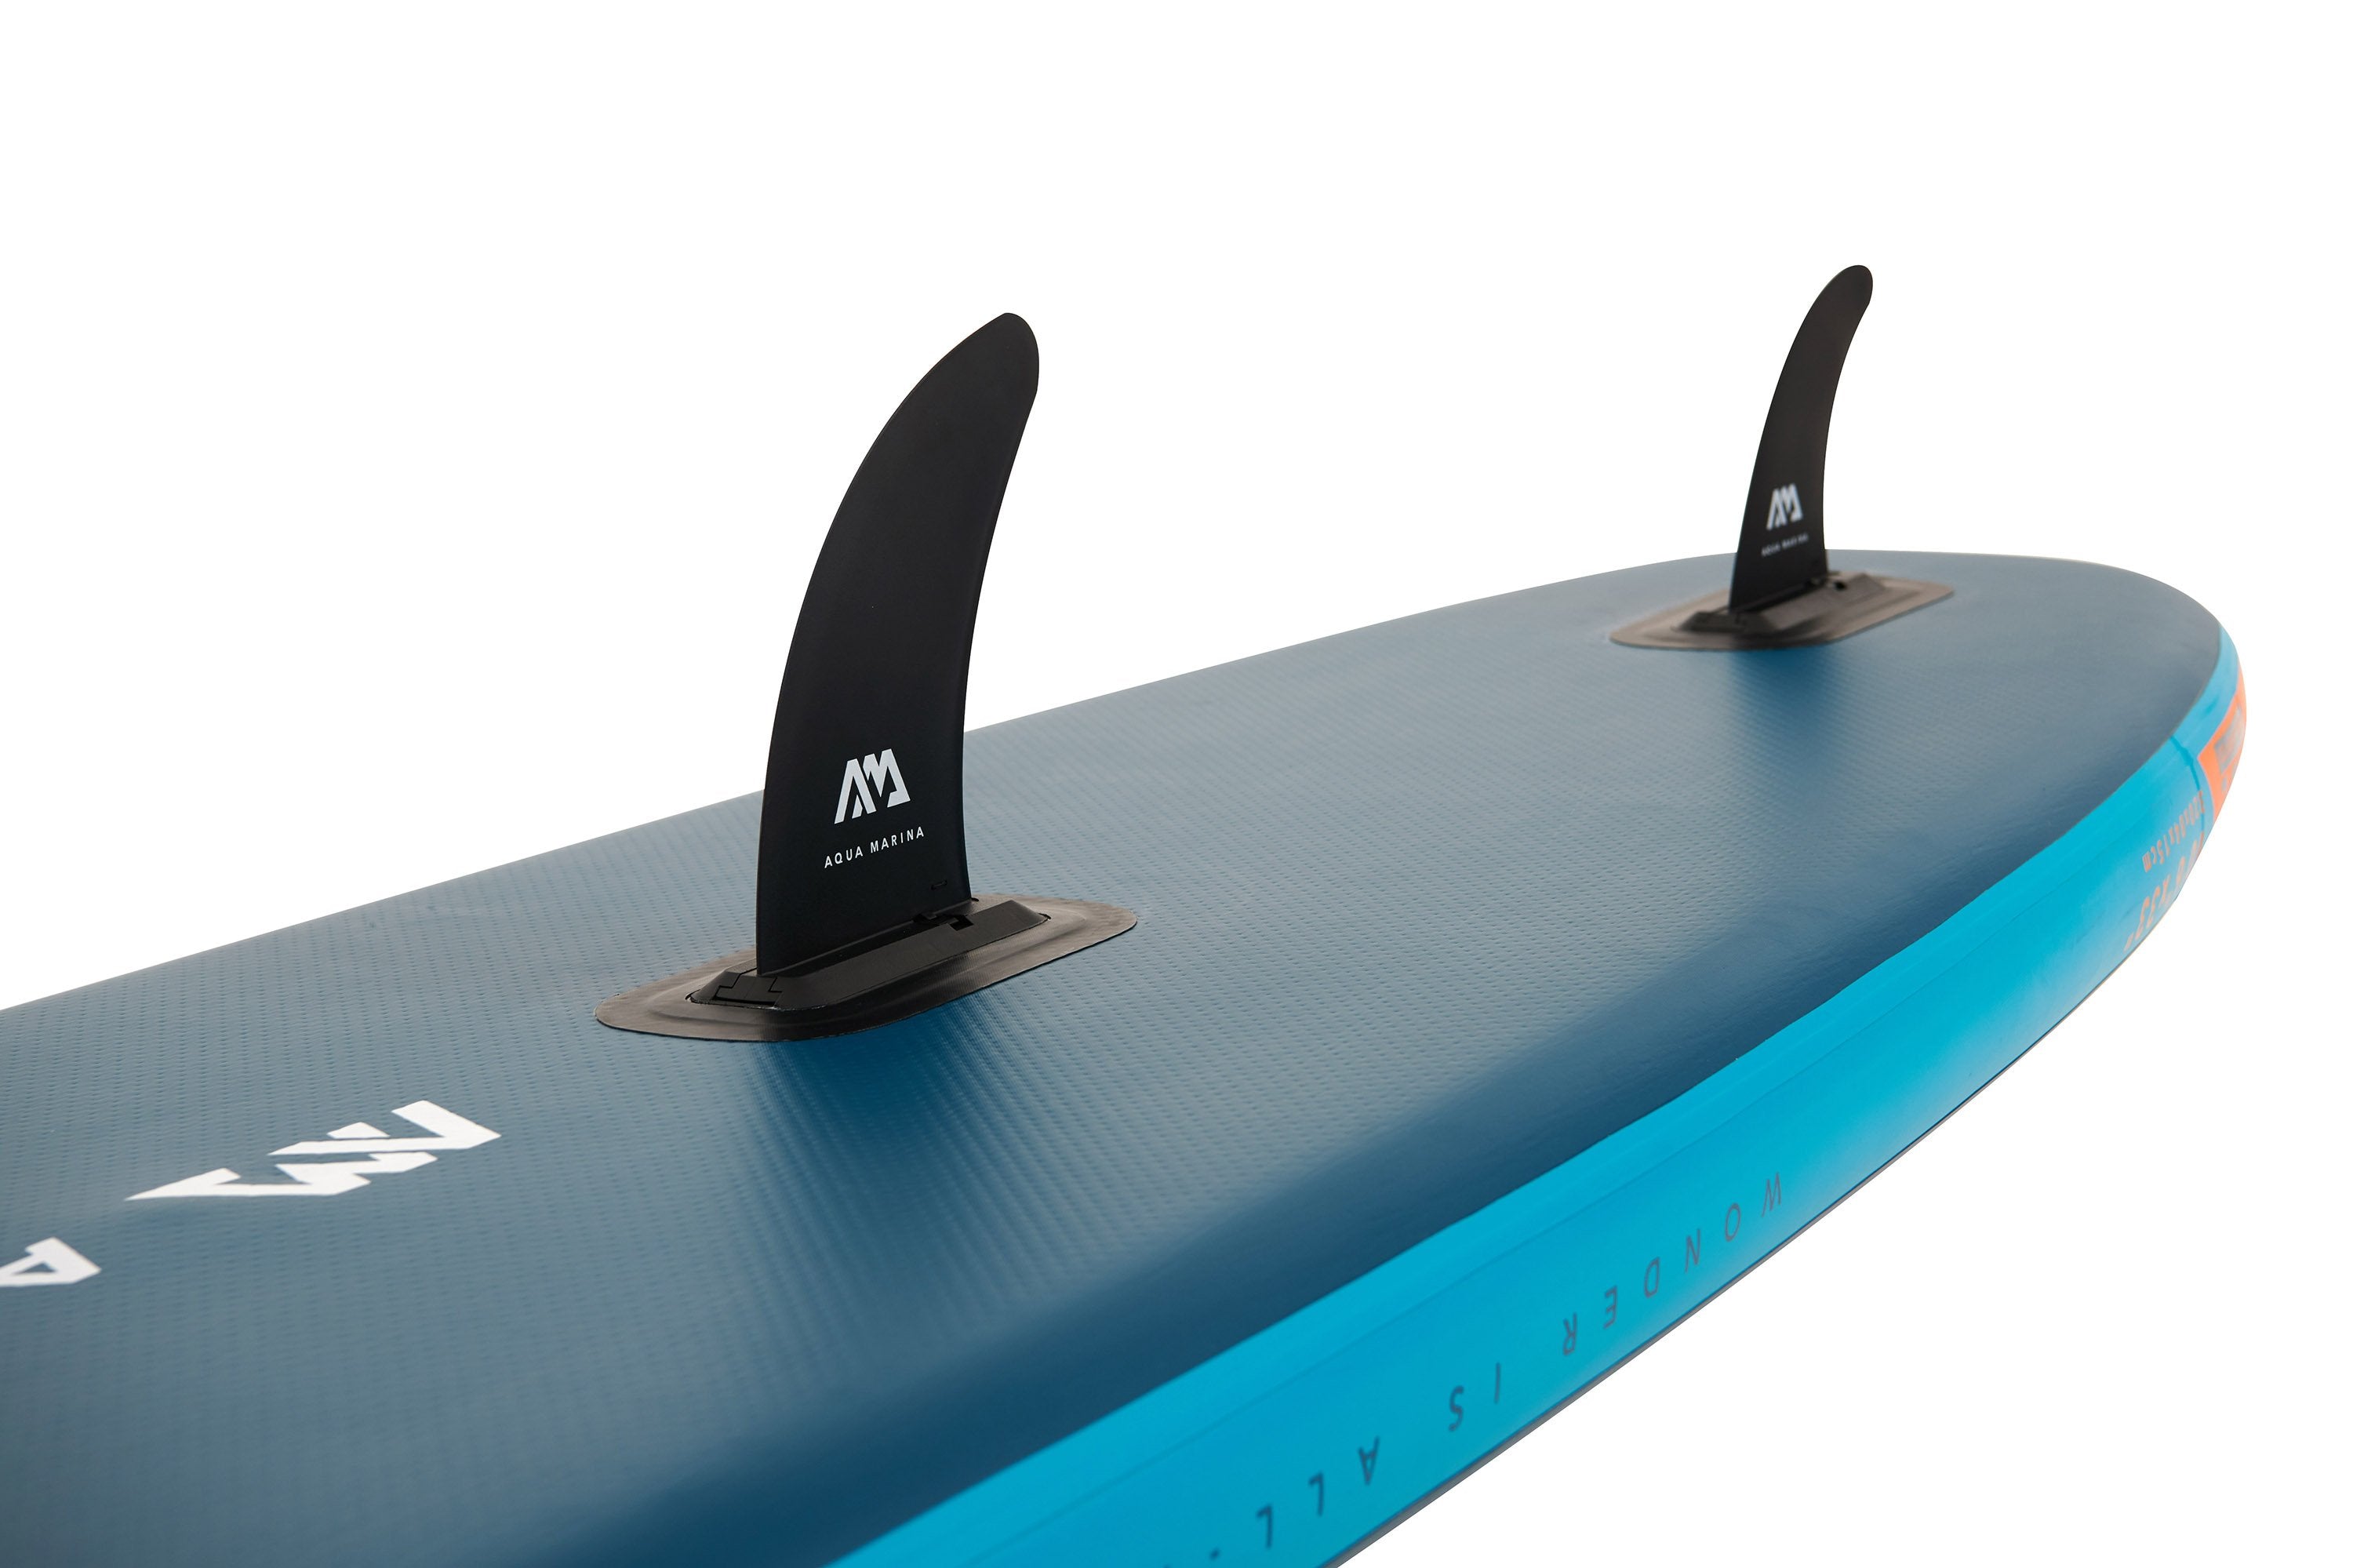 Aqua Marina Blade Windsurf SUP paket 10´6"